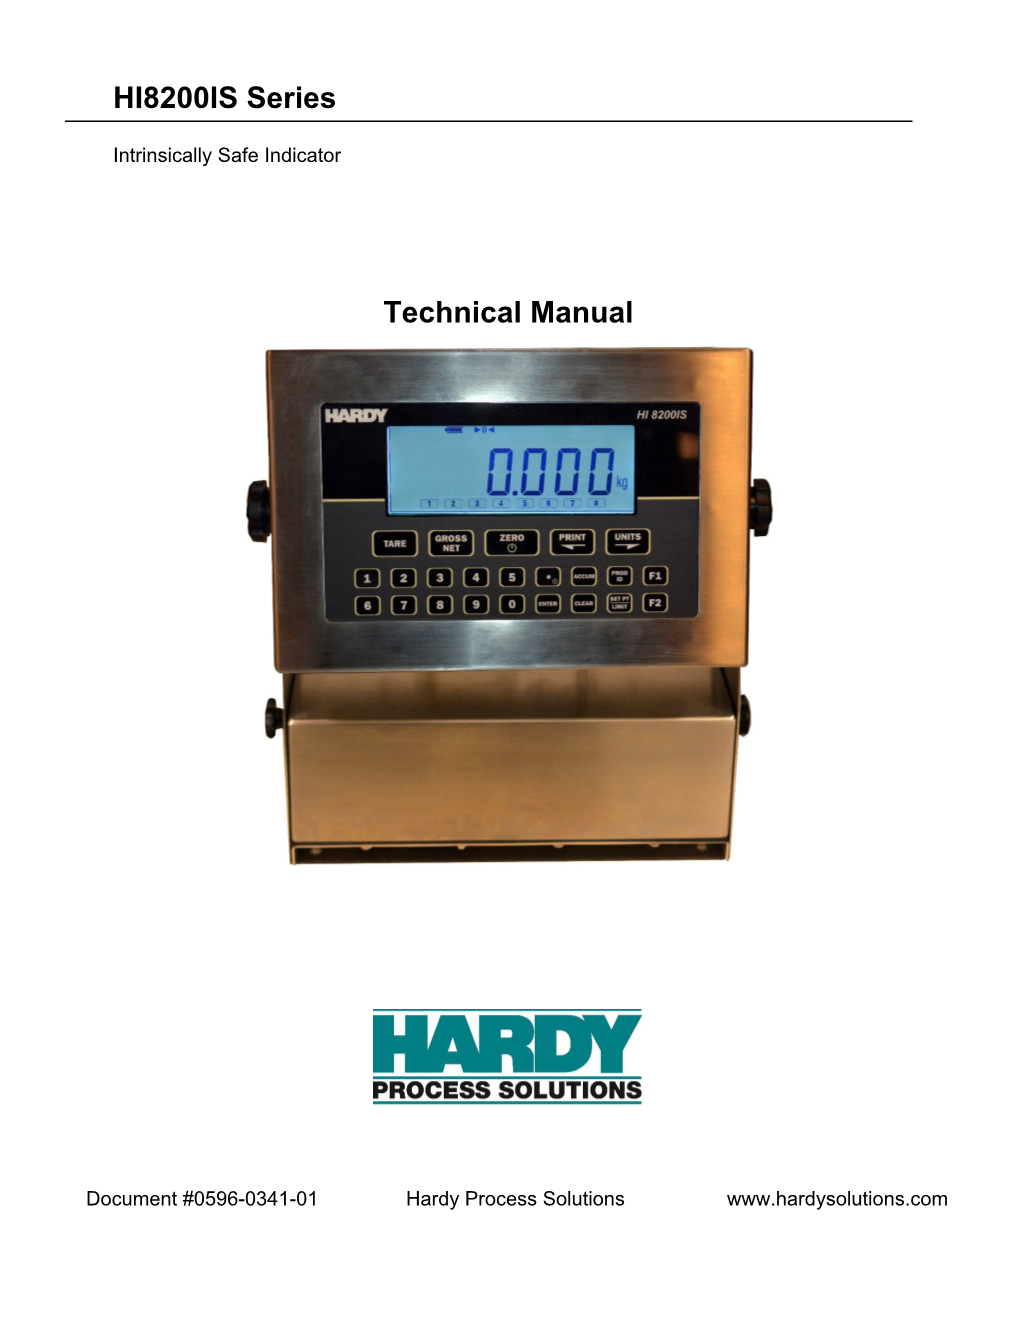 HI8200IS Series Technical Manual